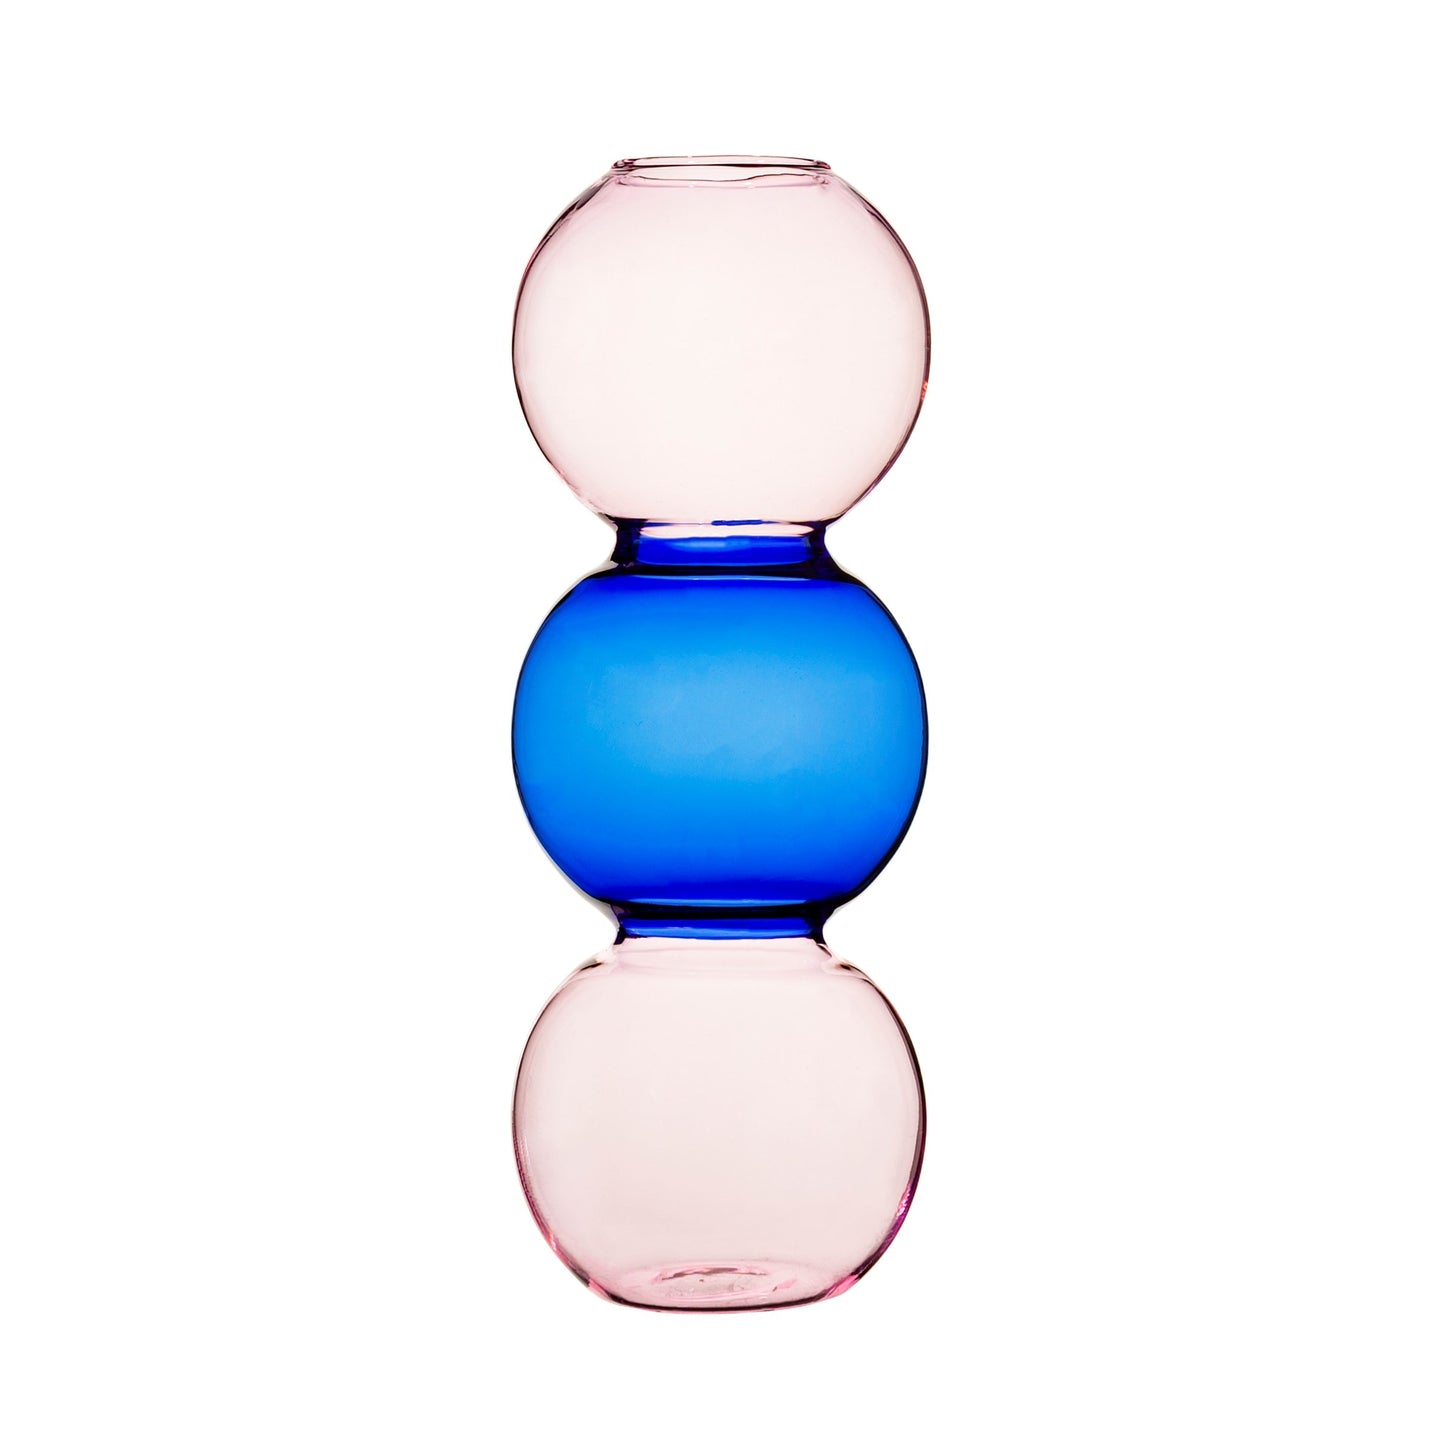 Triple Bubble Glass Vase in Blue & Pink